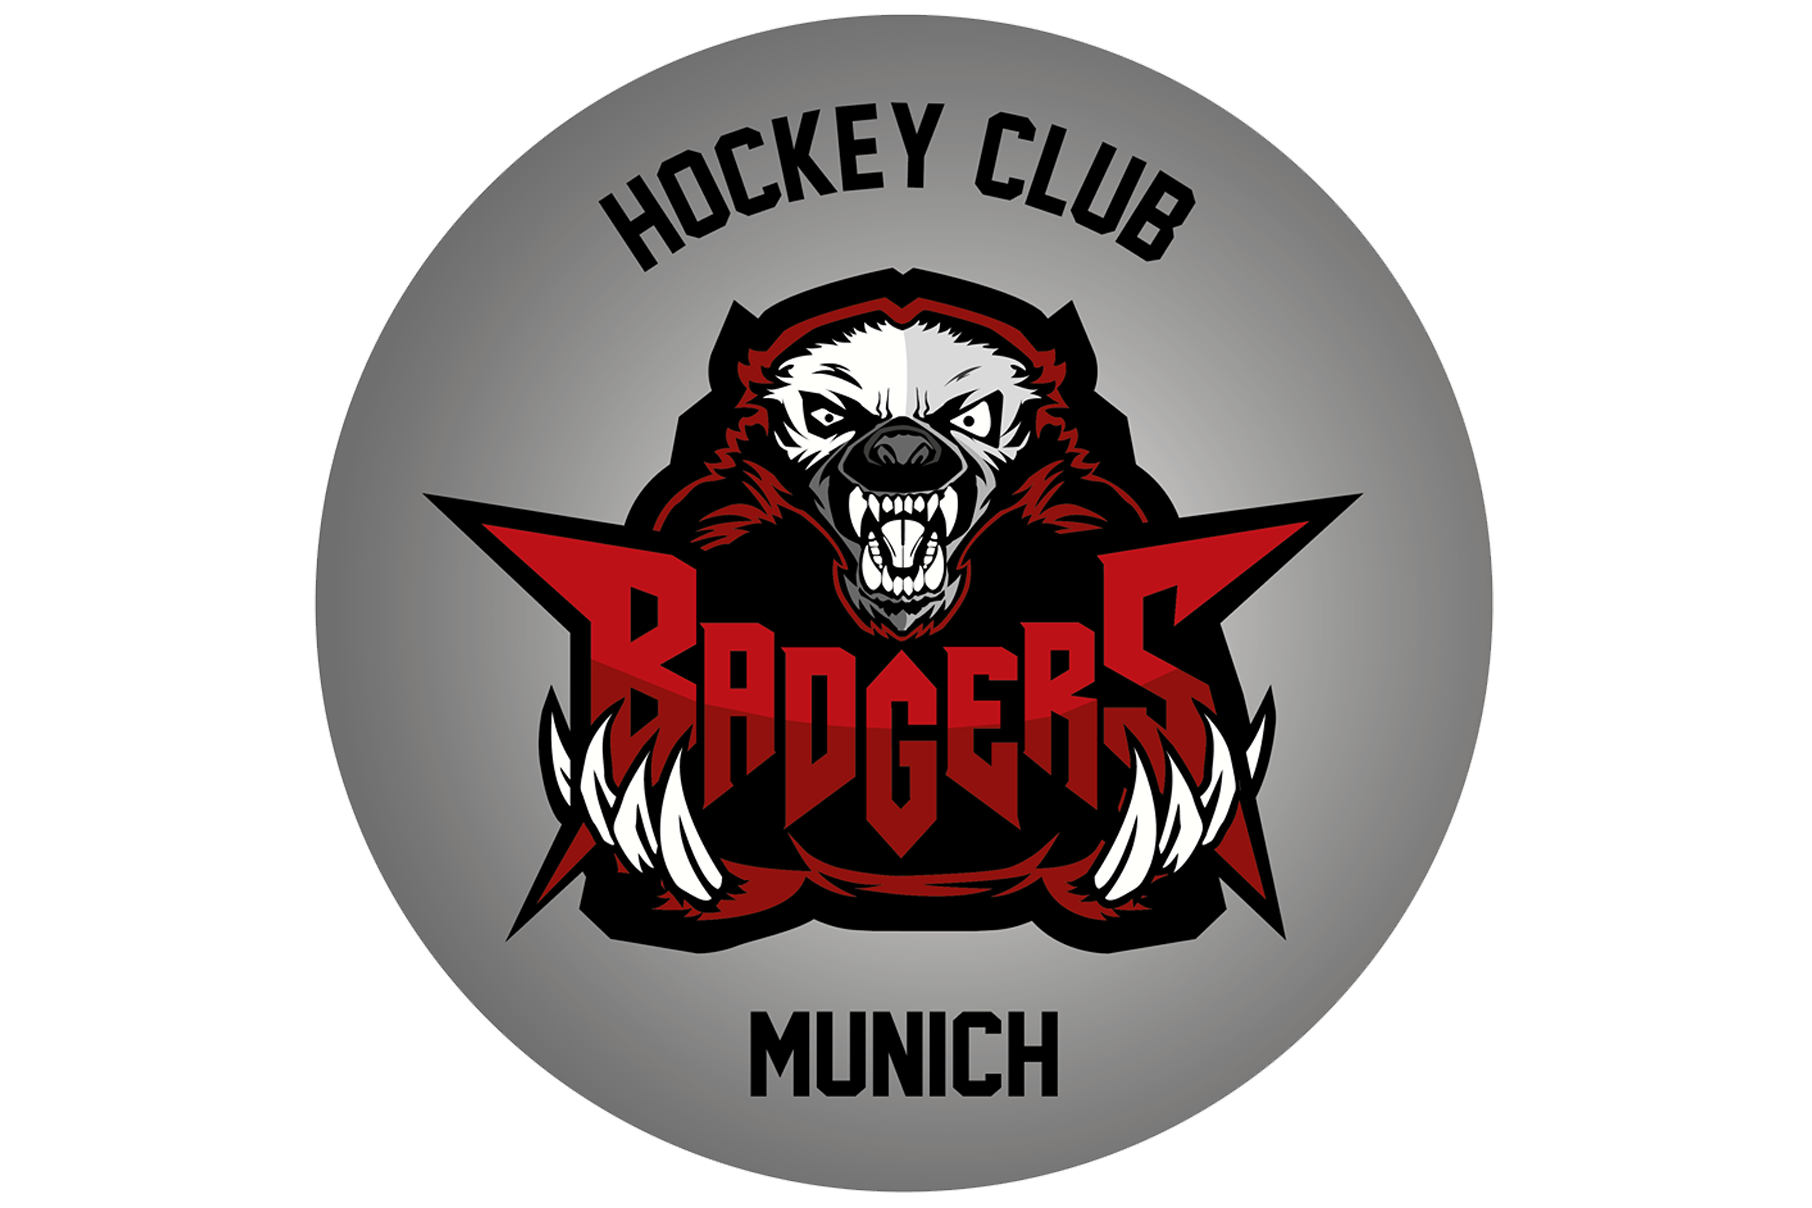 The Badgers Hockey Club